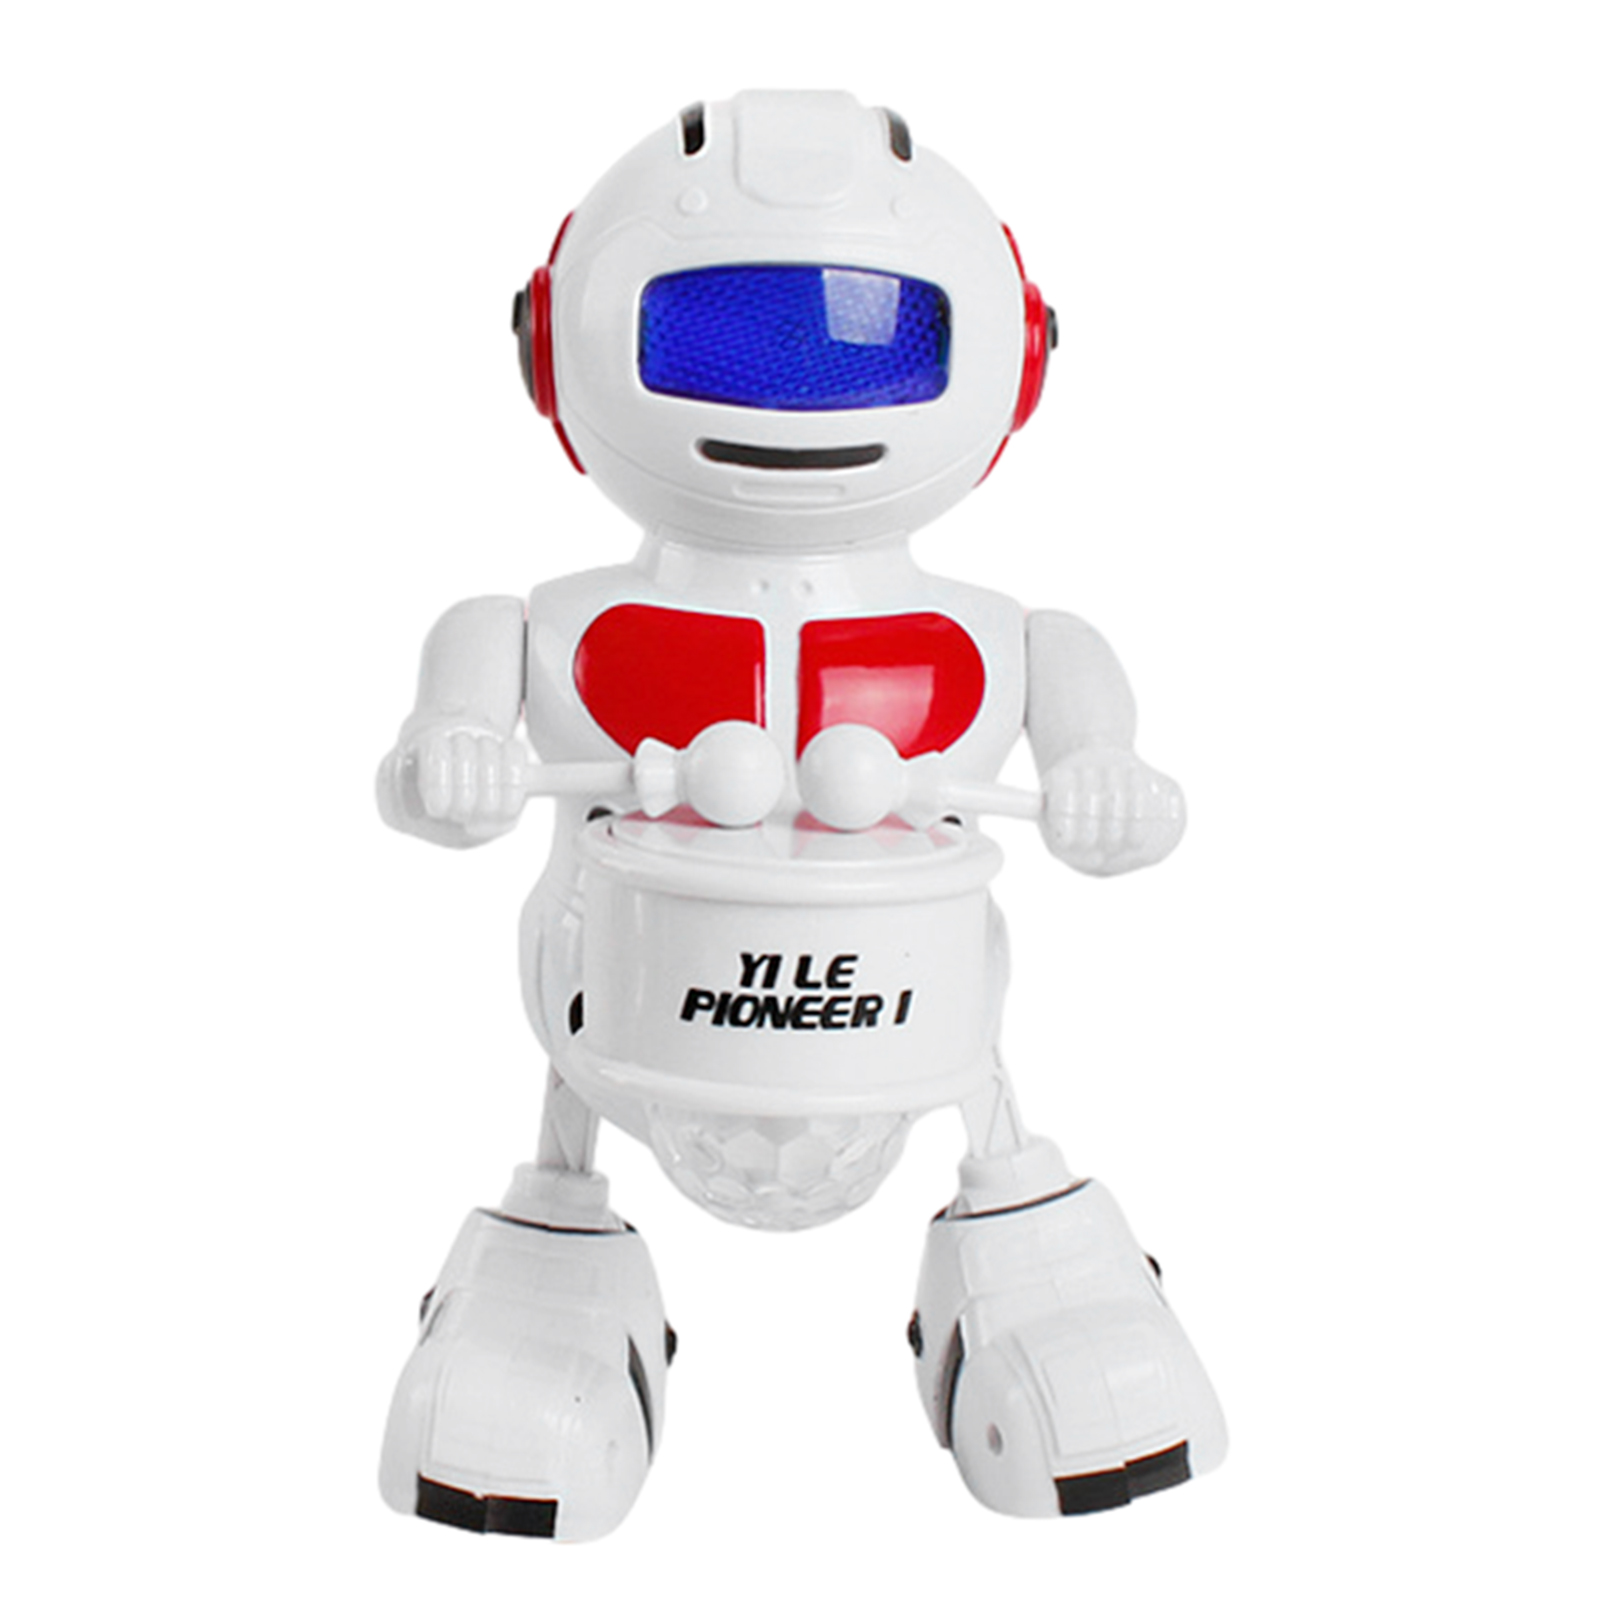 Kids Dance Robot Toys With Music Light Electronic Walking Dancing Smart Robot For Boys Girls Birthday Christmas Gift